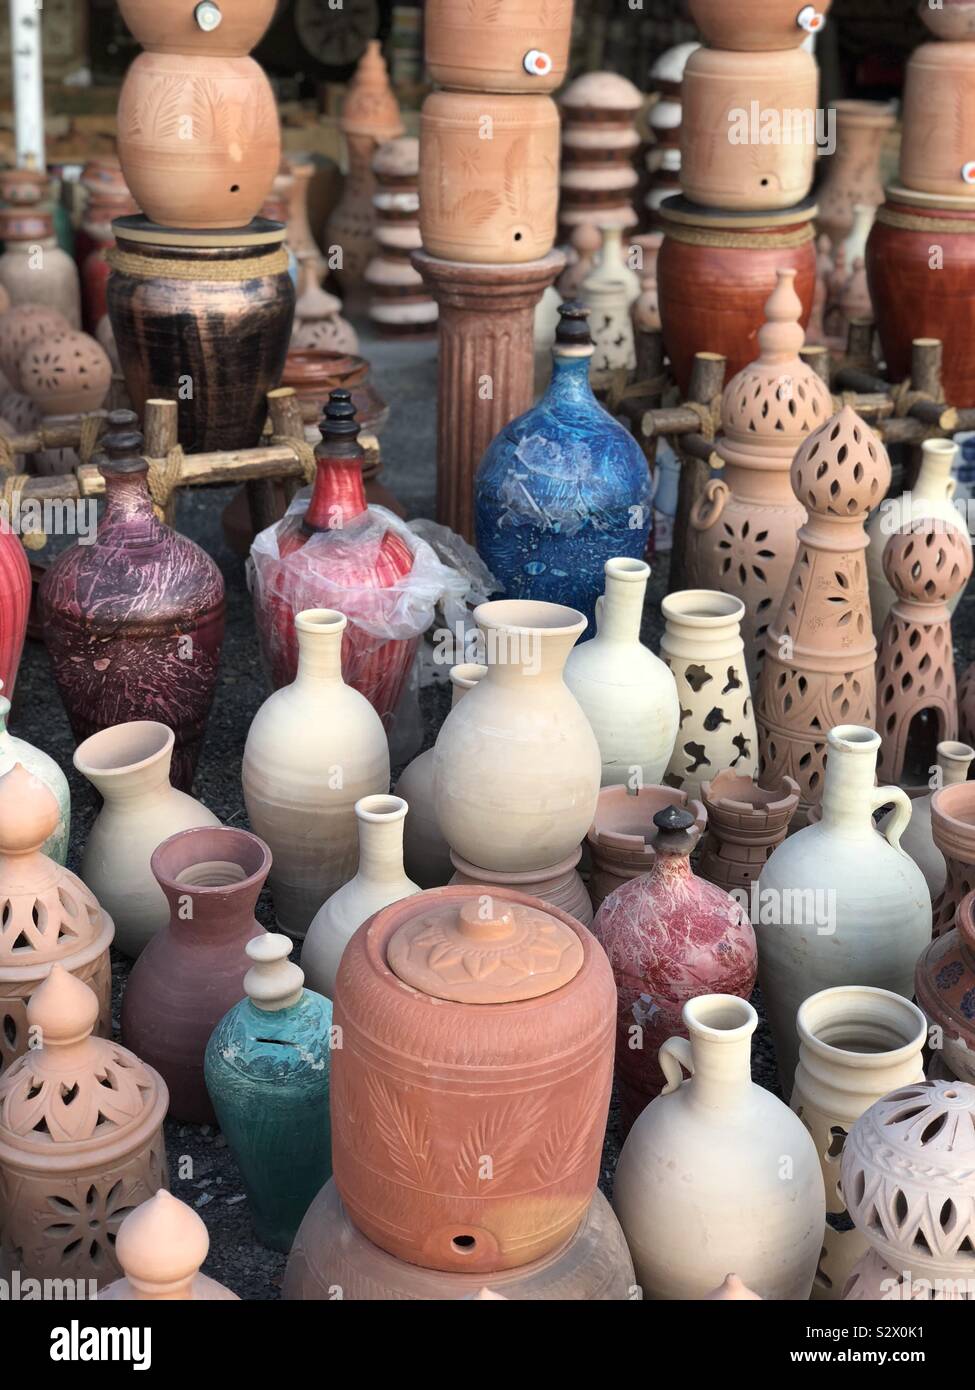 Objetos artesanales de cerámica Fotografía de stock - Alamy